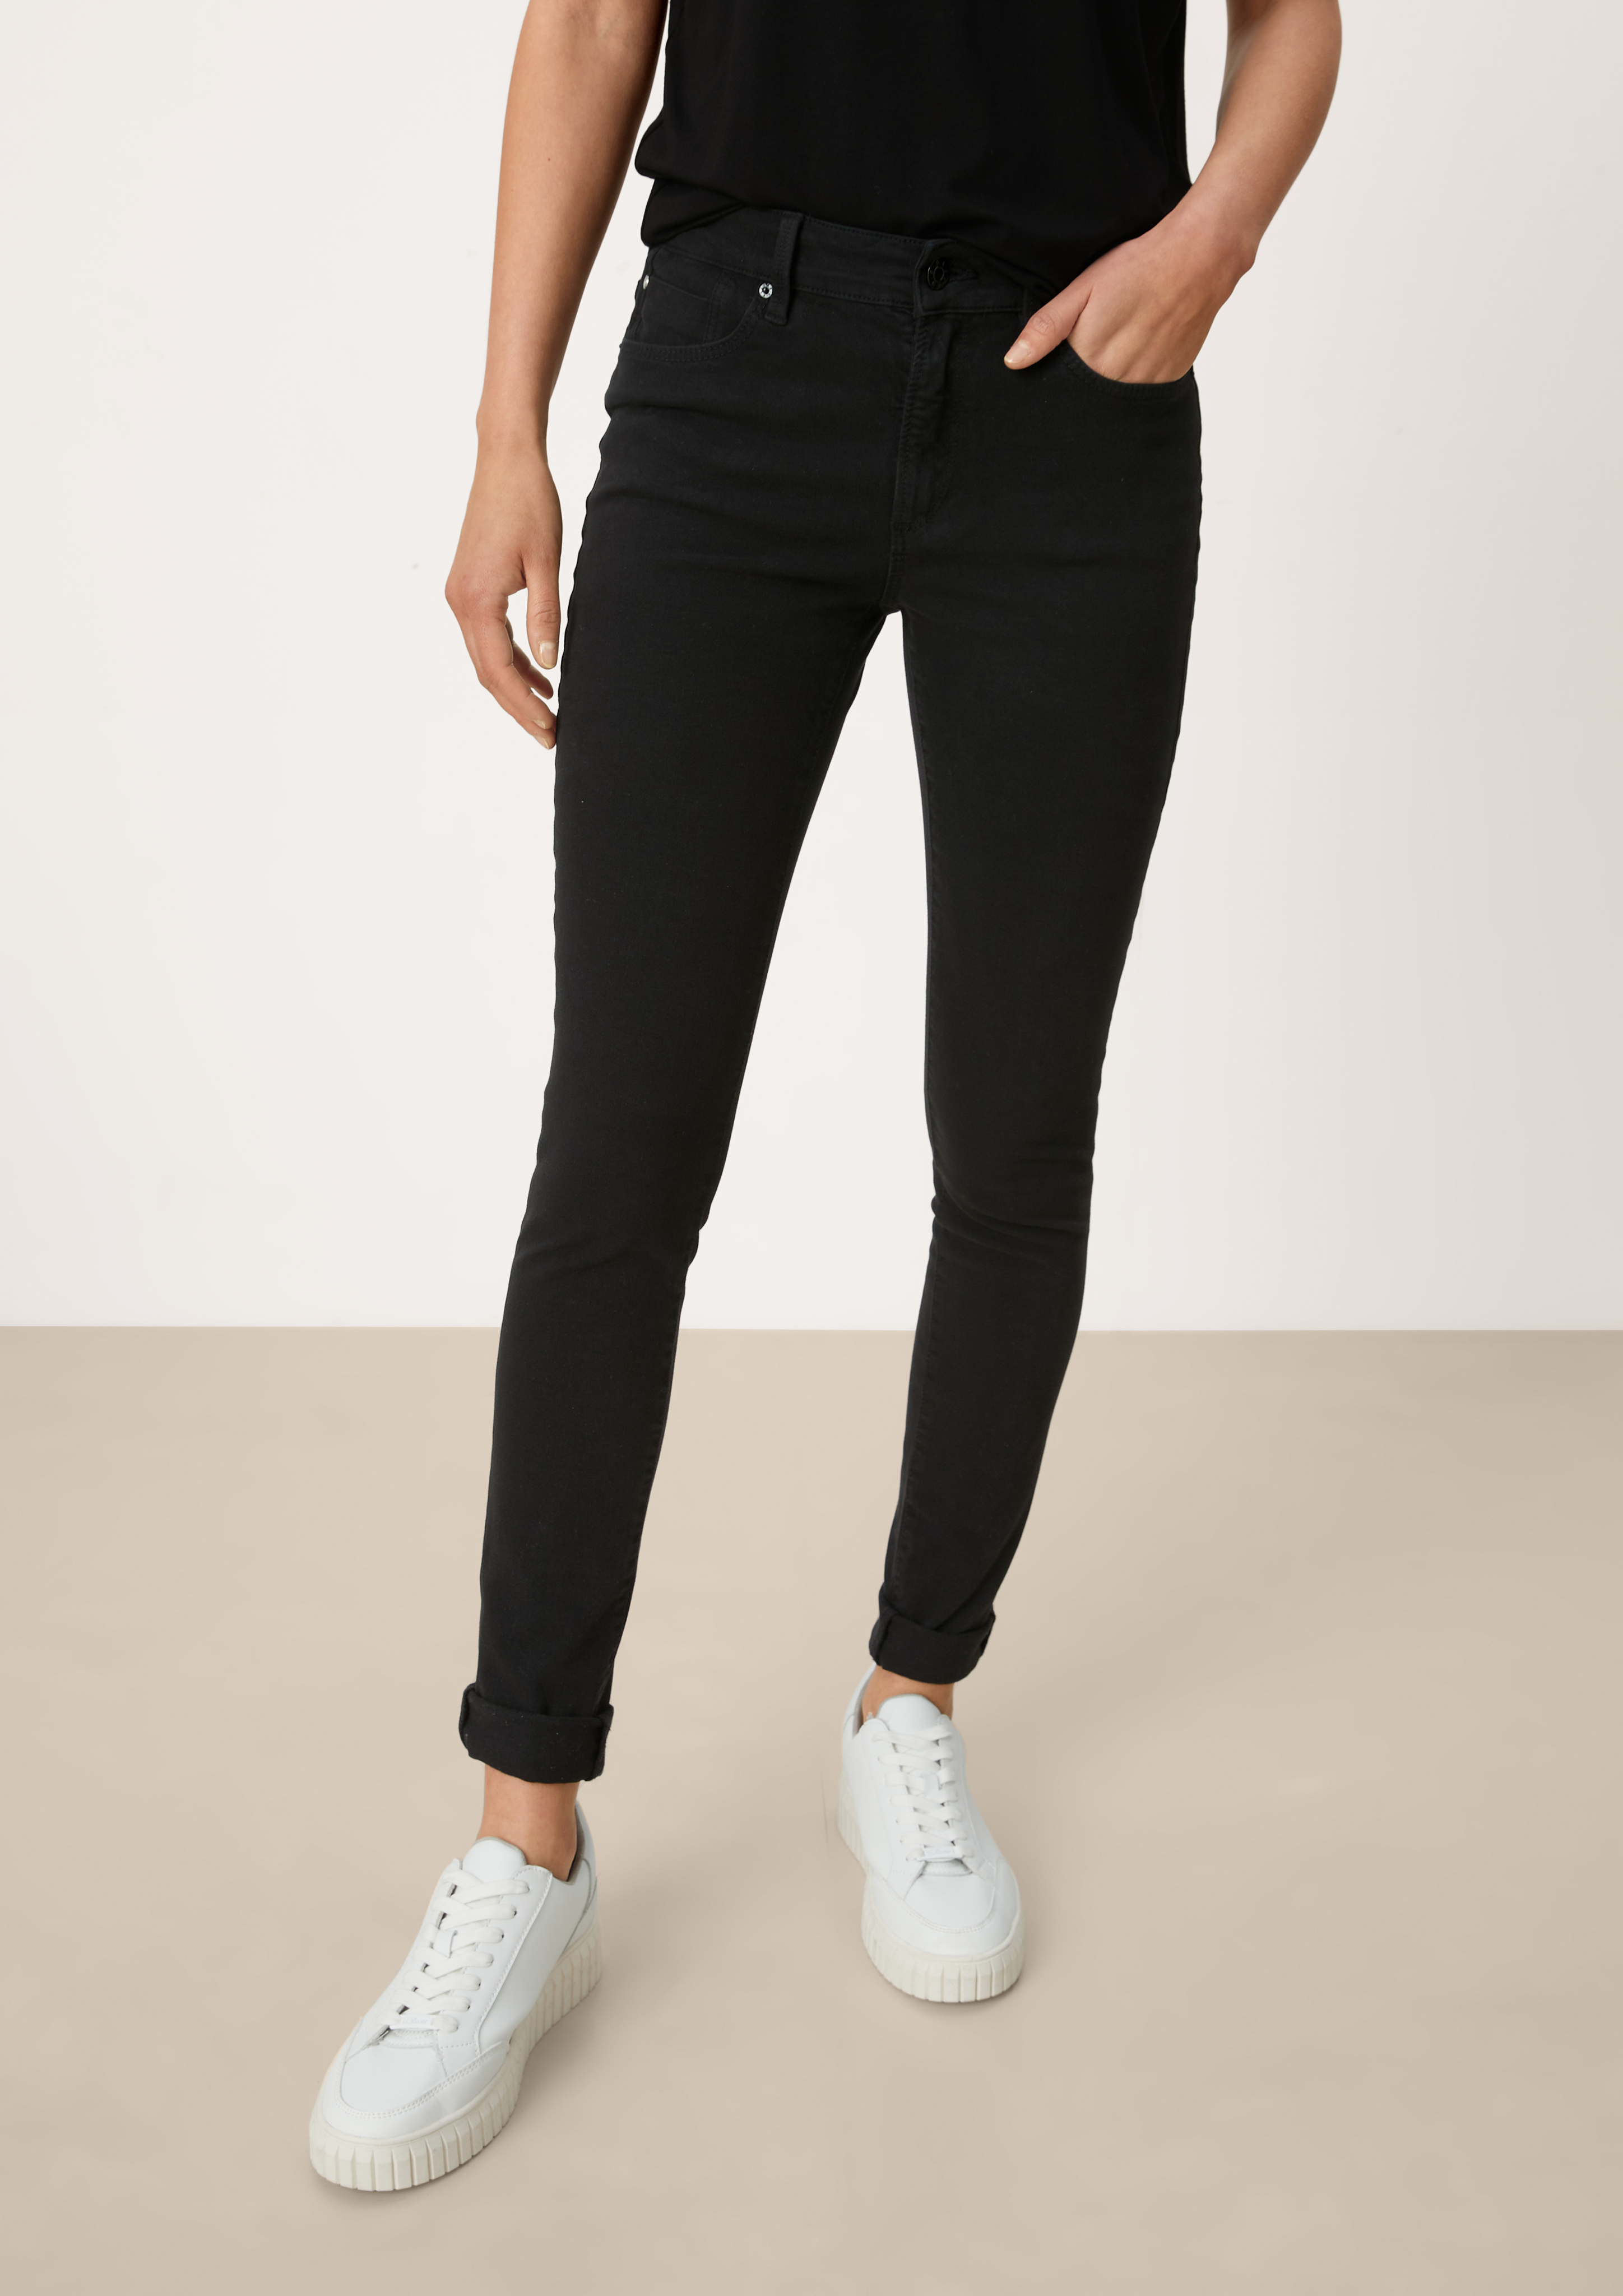 Izabell jeans skinny / mid skinny / fit rise leg black - 